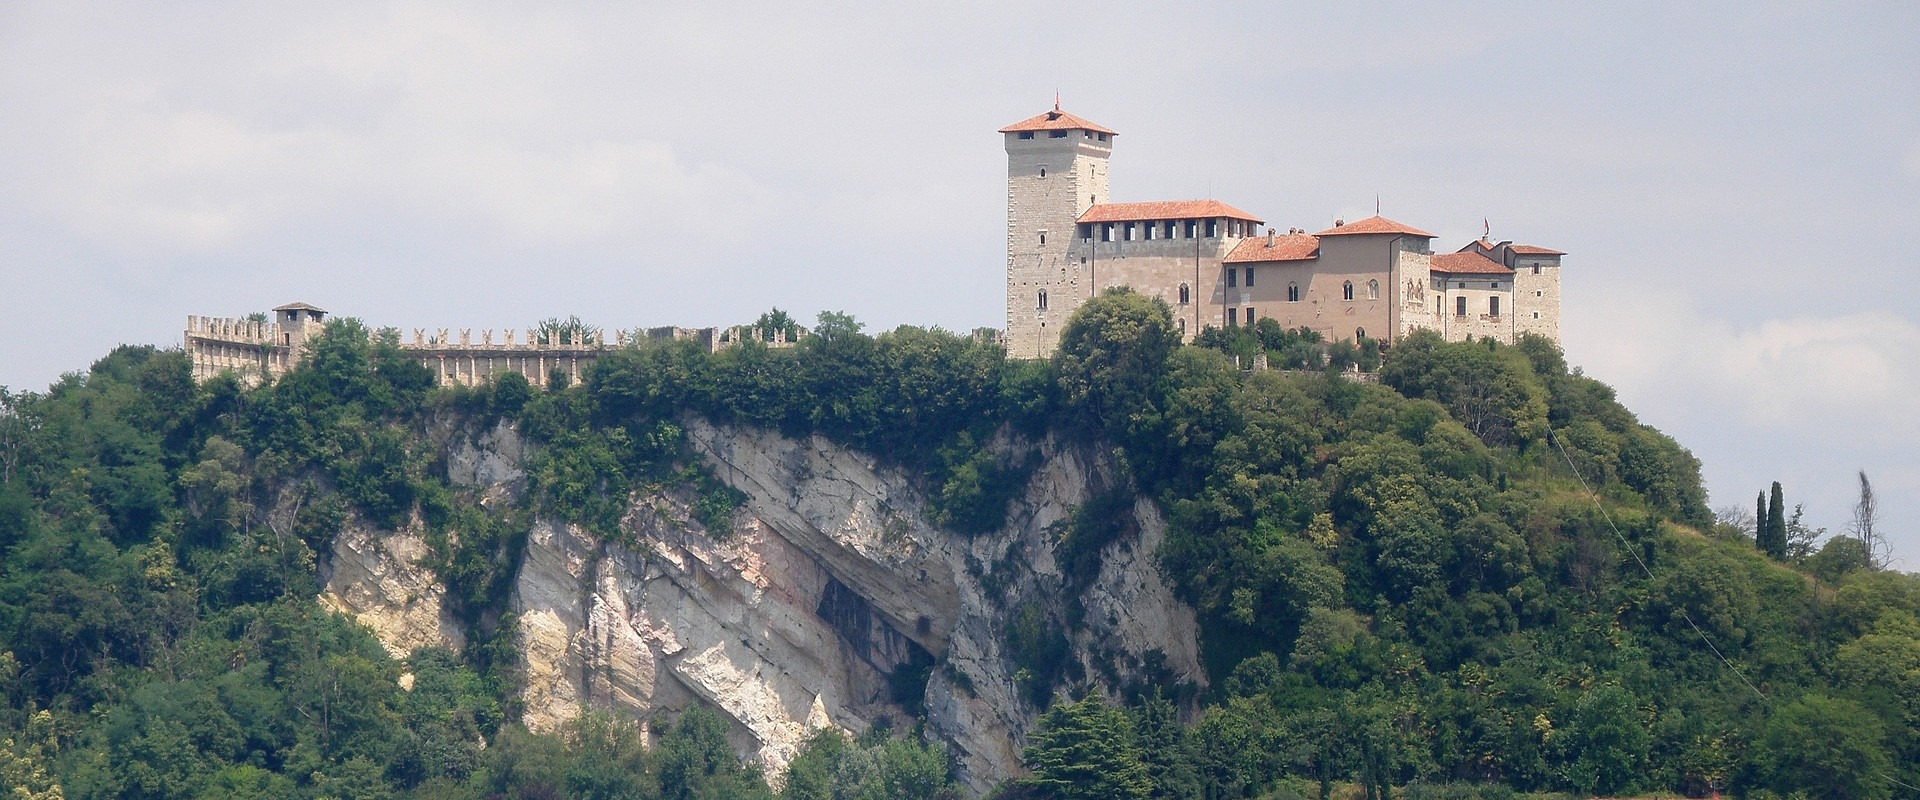 Angera - Castello Borromeo